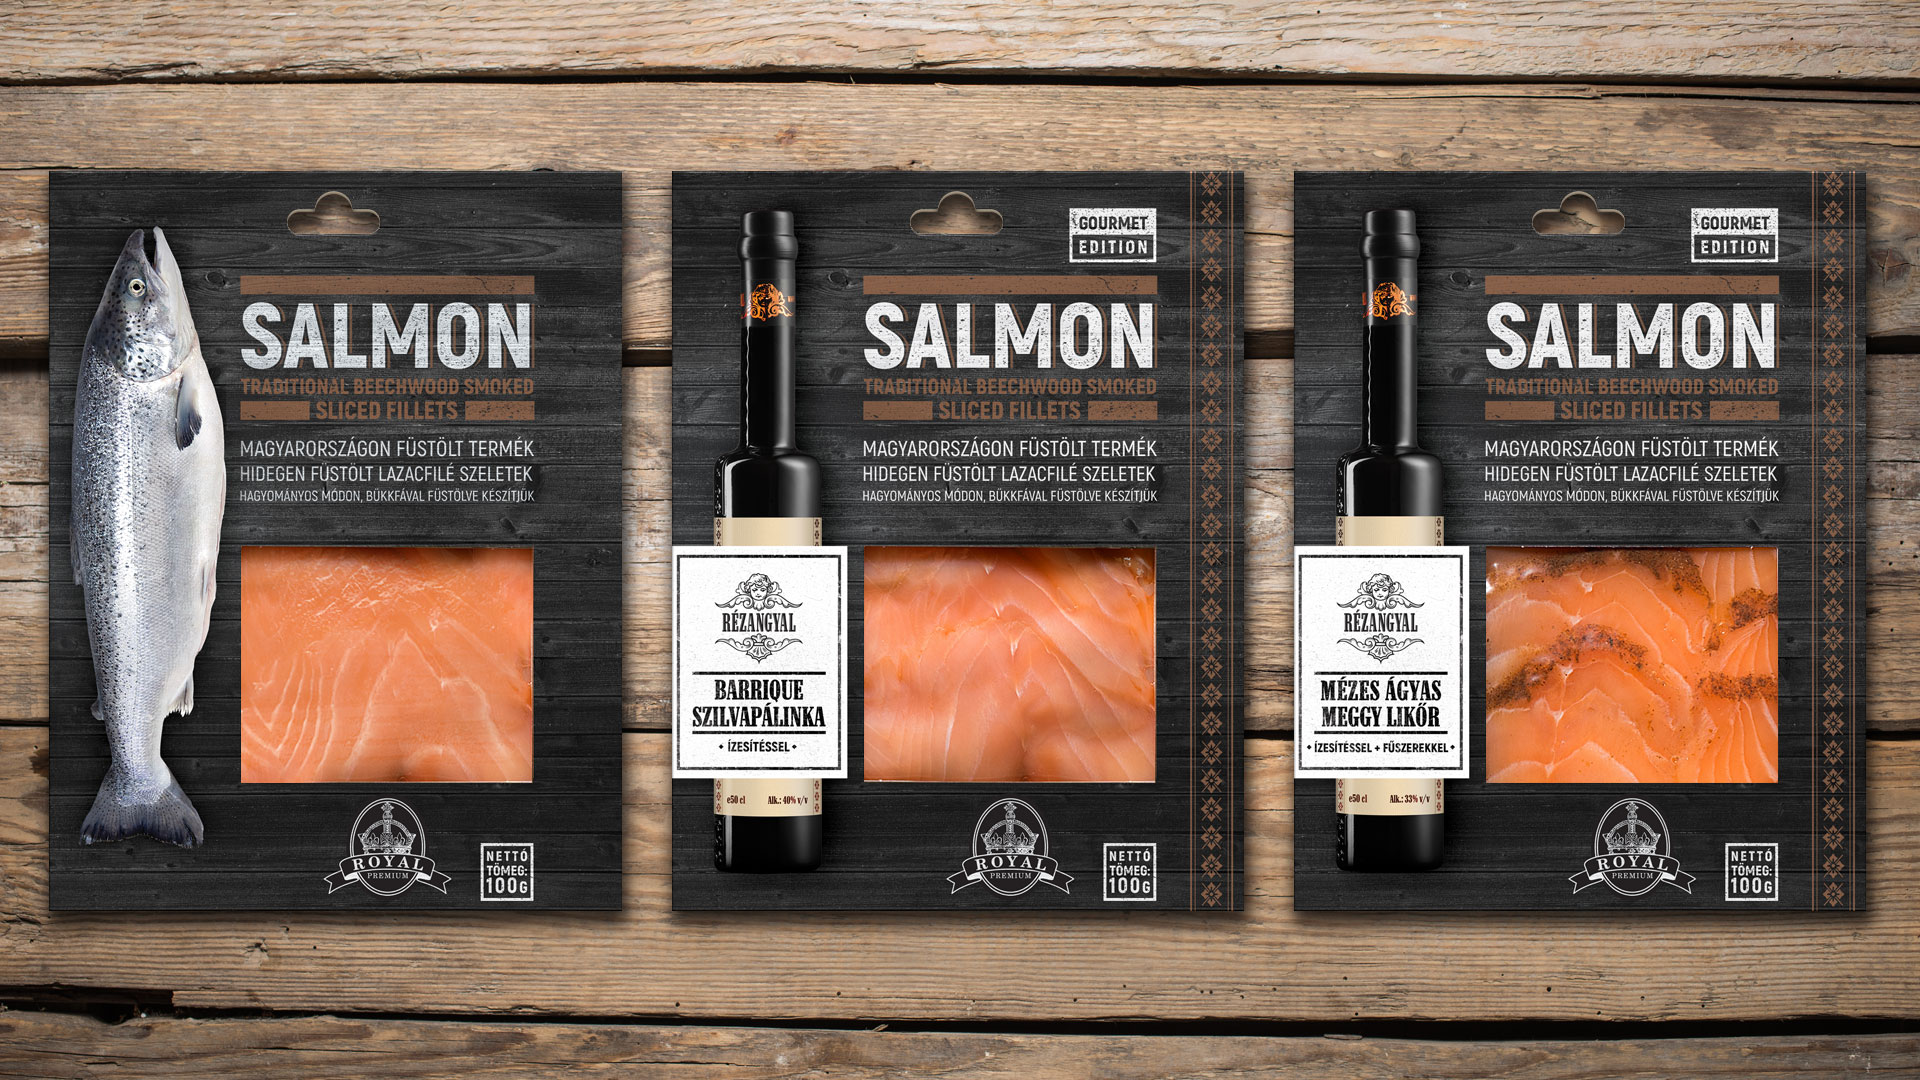 HEYTHERE Agency – Royal Premium Salmon